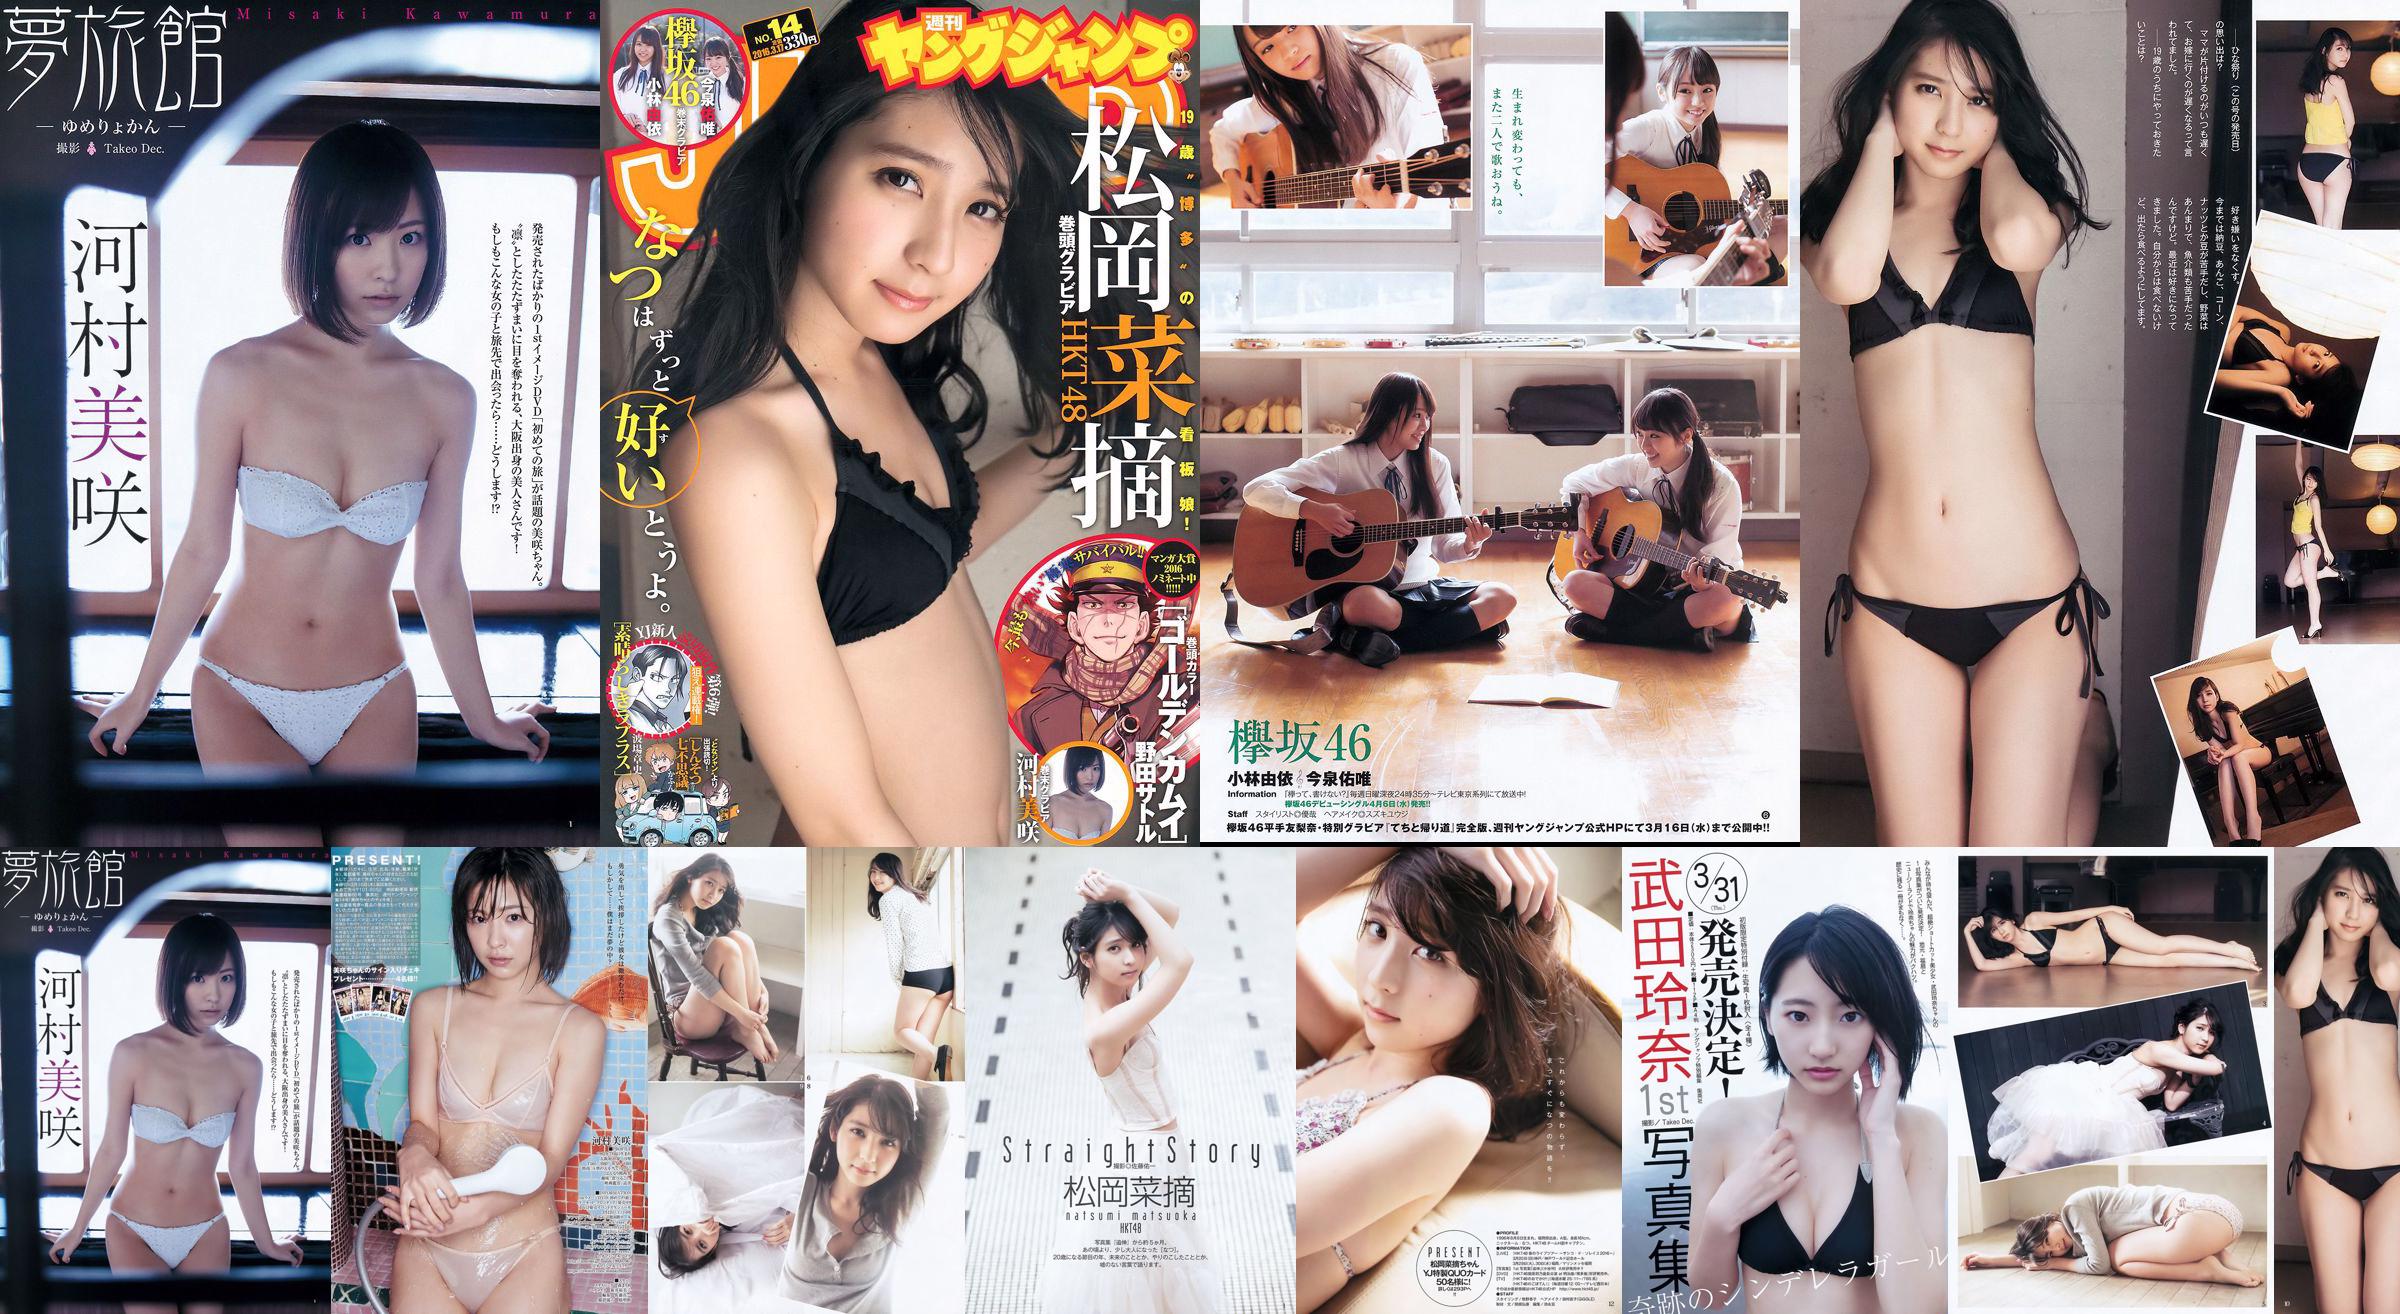 Hái rau Muraoka Yui Kobayashi Yui Imaizumi Misaki Kawamura [Weekly Young Jump] Tạp chí ảnh số 14 năm 2016 No.844e69 Trang 1